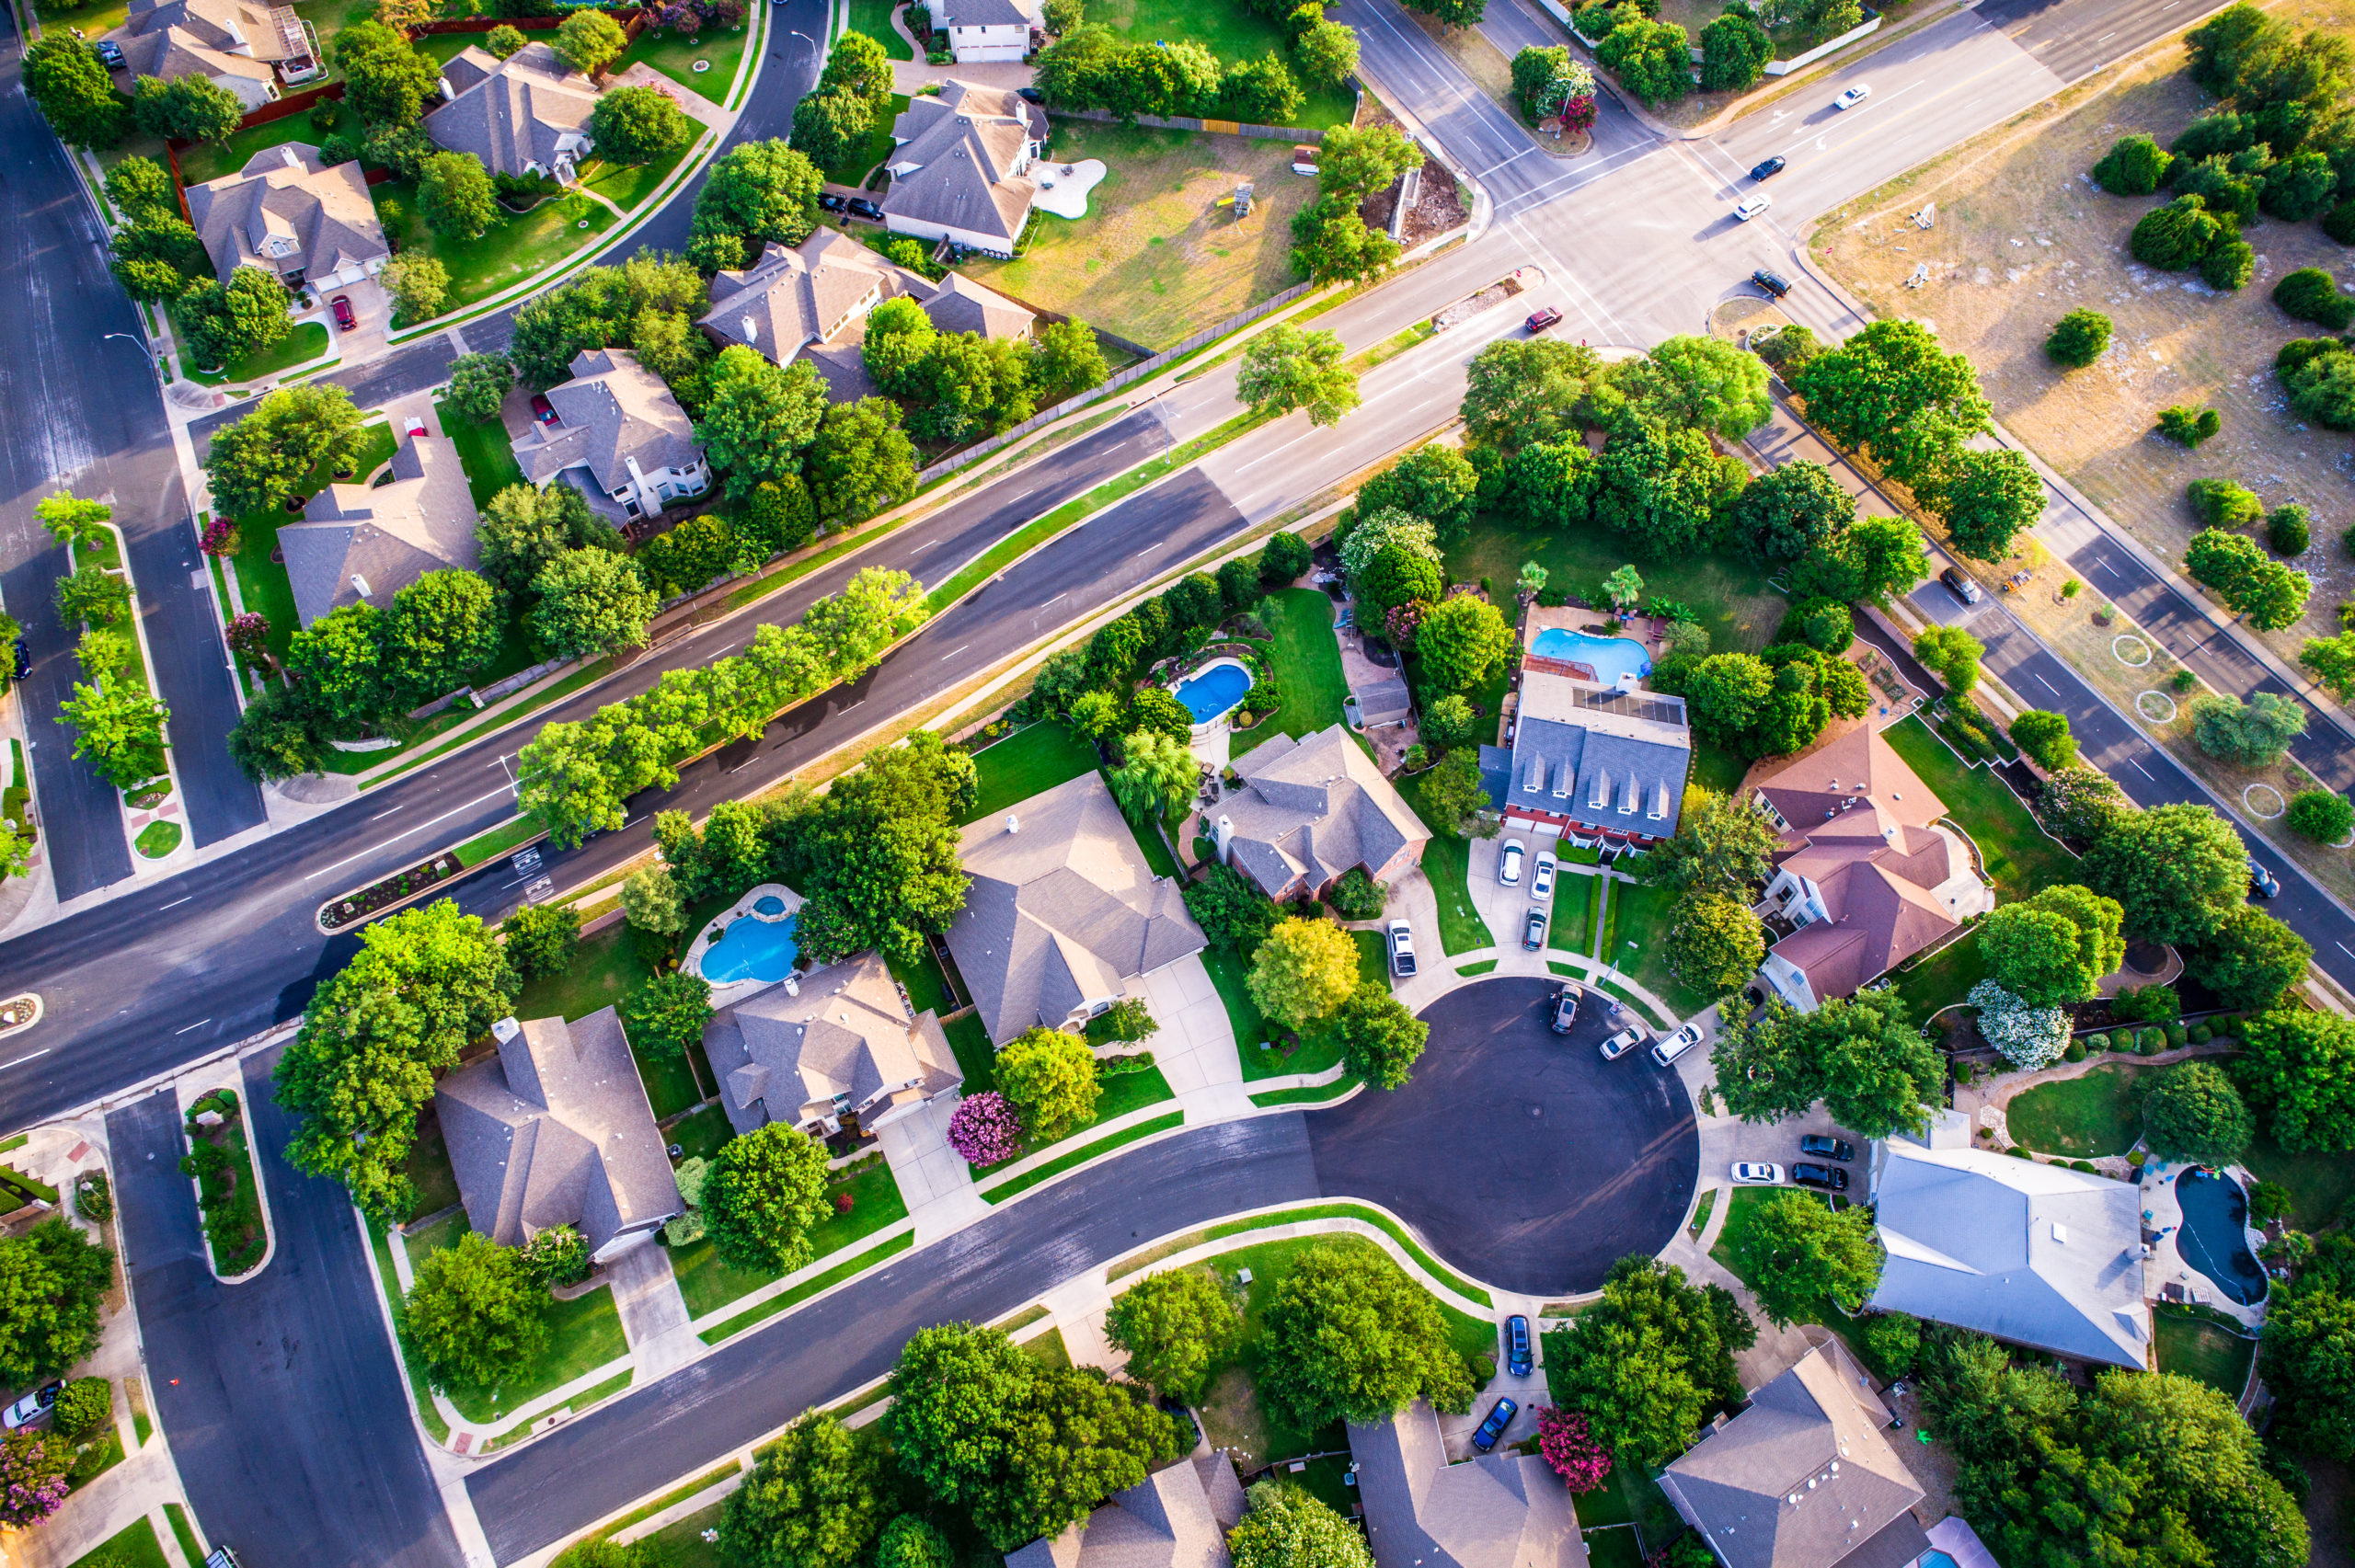 Aerial view of an Austin neighborhood